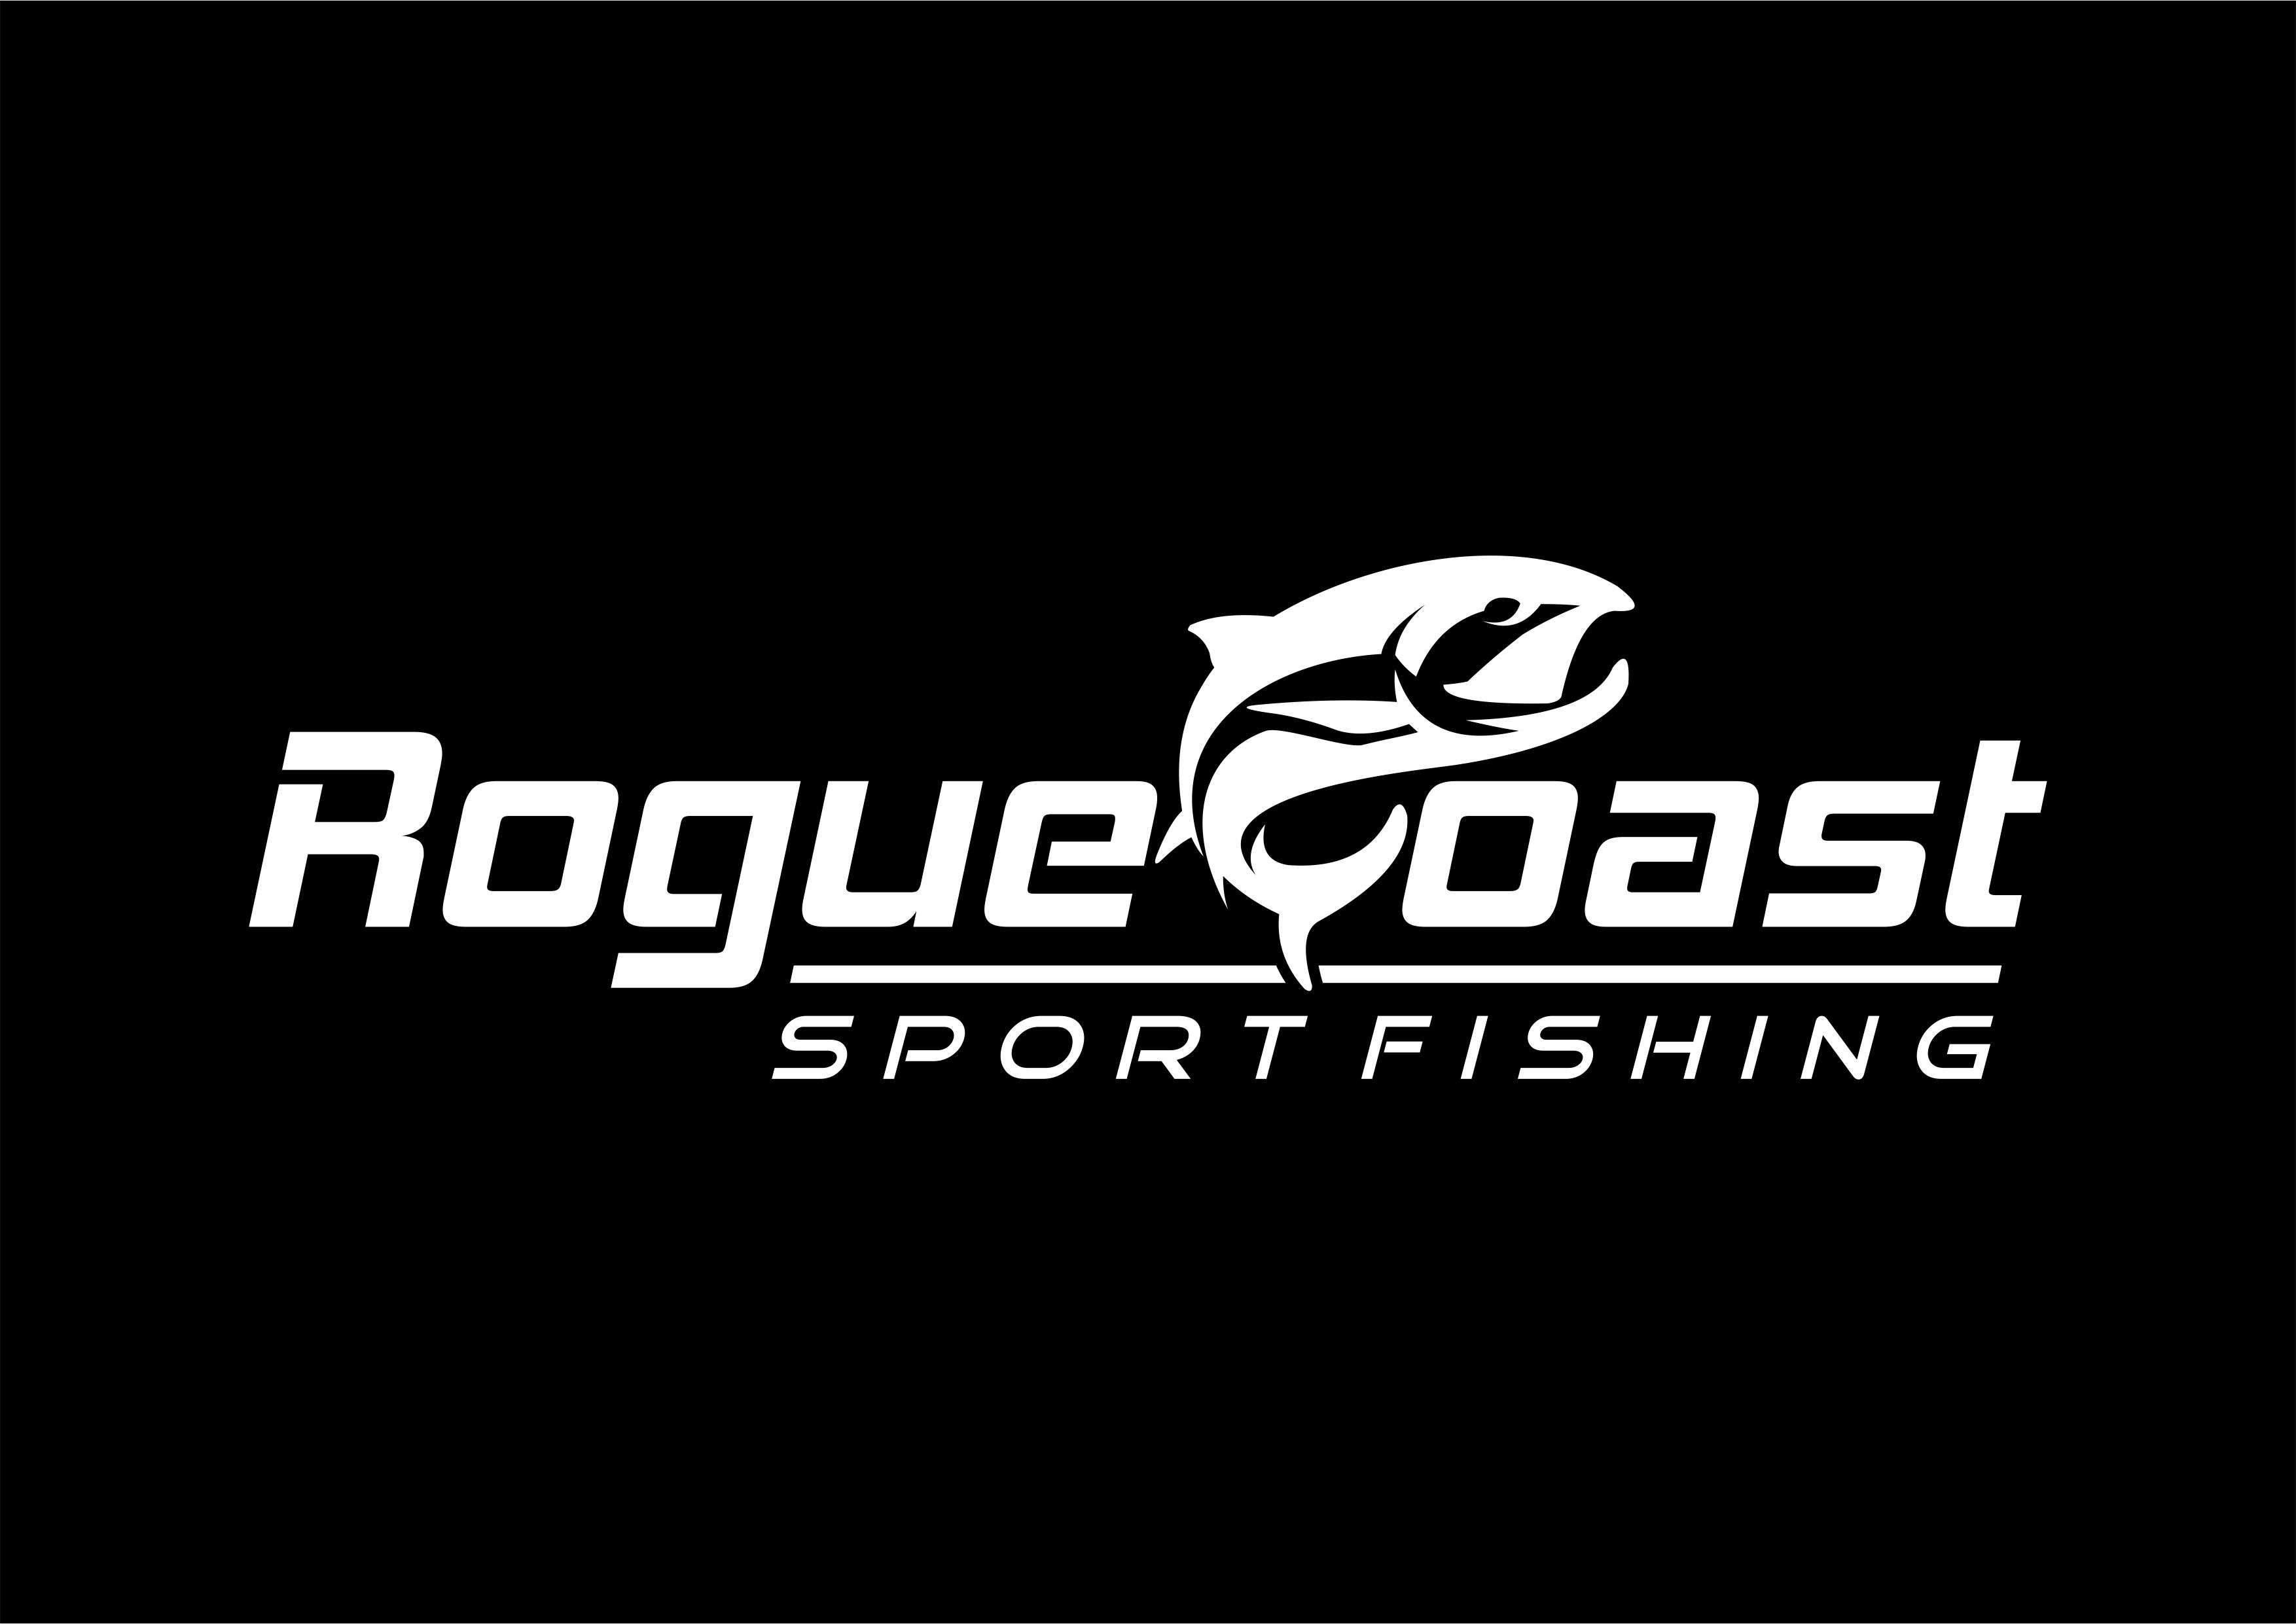 Rogue Coast Sport Fishing